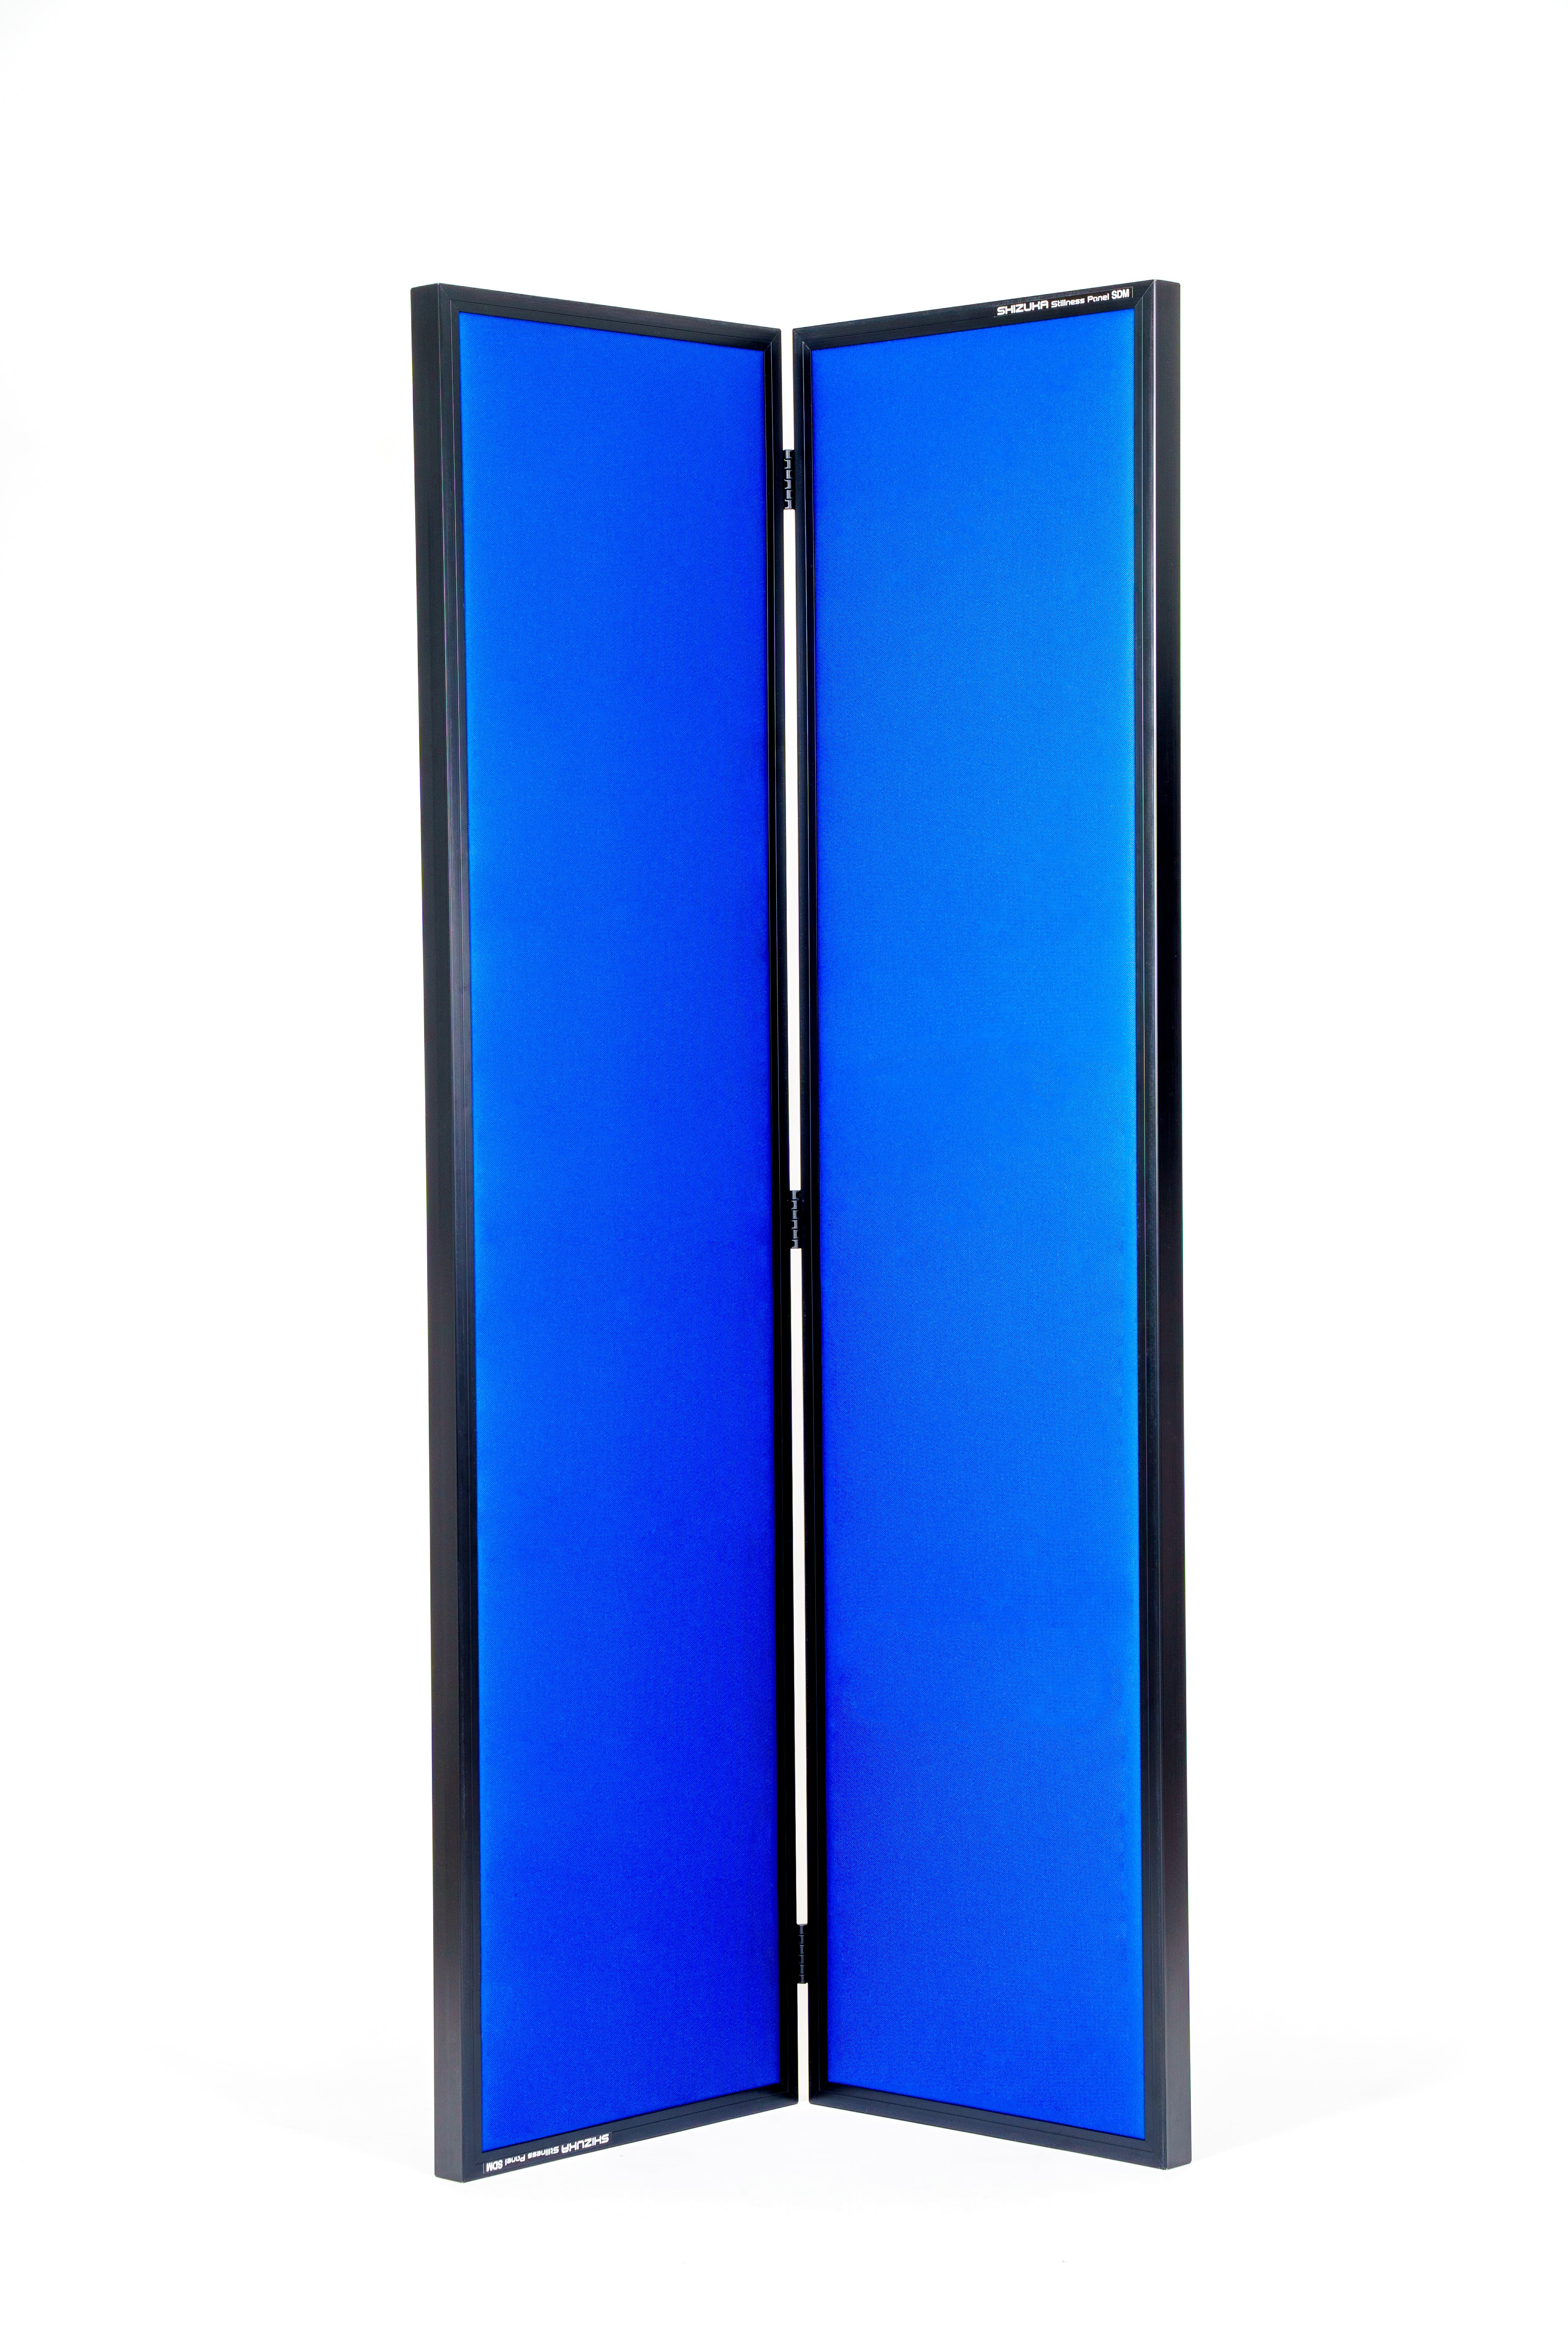 SHIZUKA Stillness Panel SDM-1800 (blue 高さ1800㎜） – サイレント 